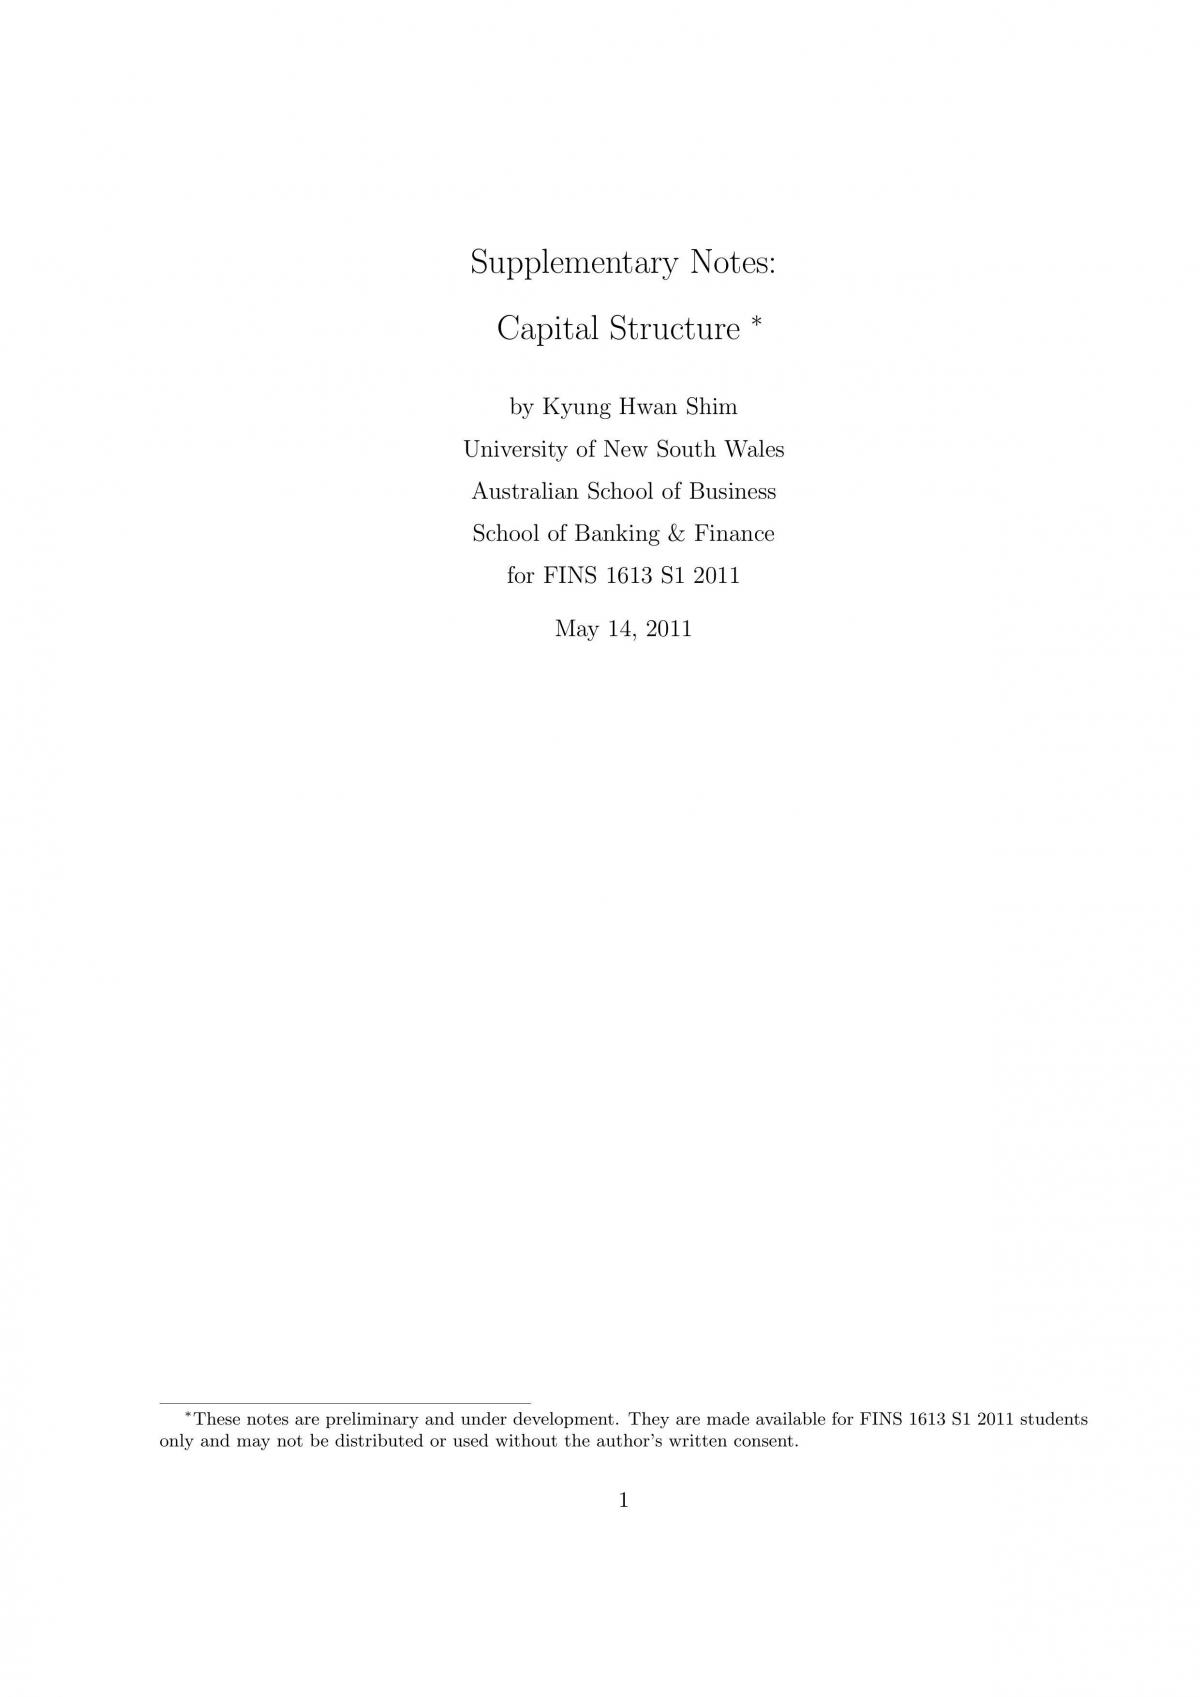 Capital Budgeting - Page 1